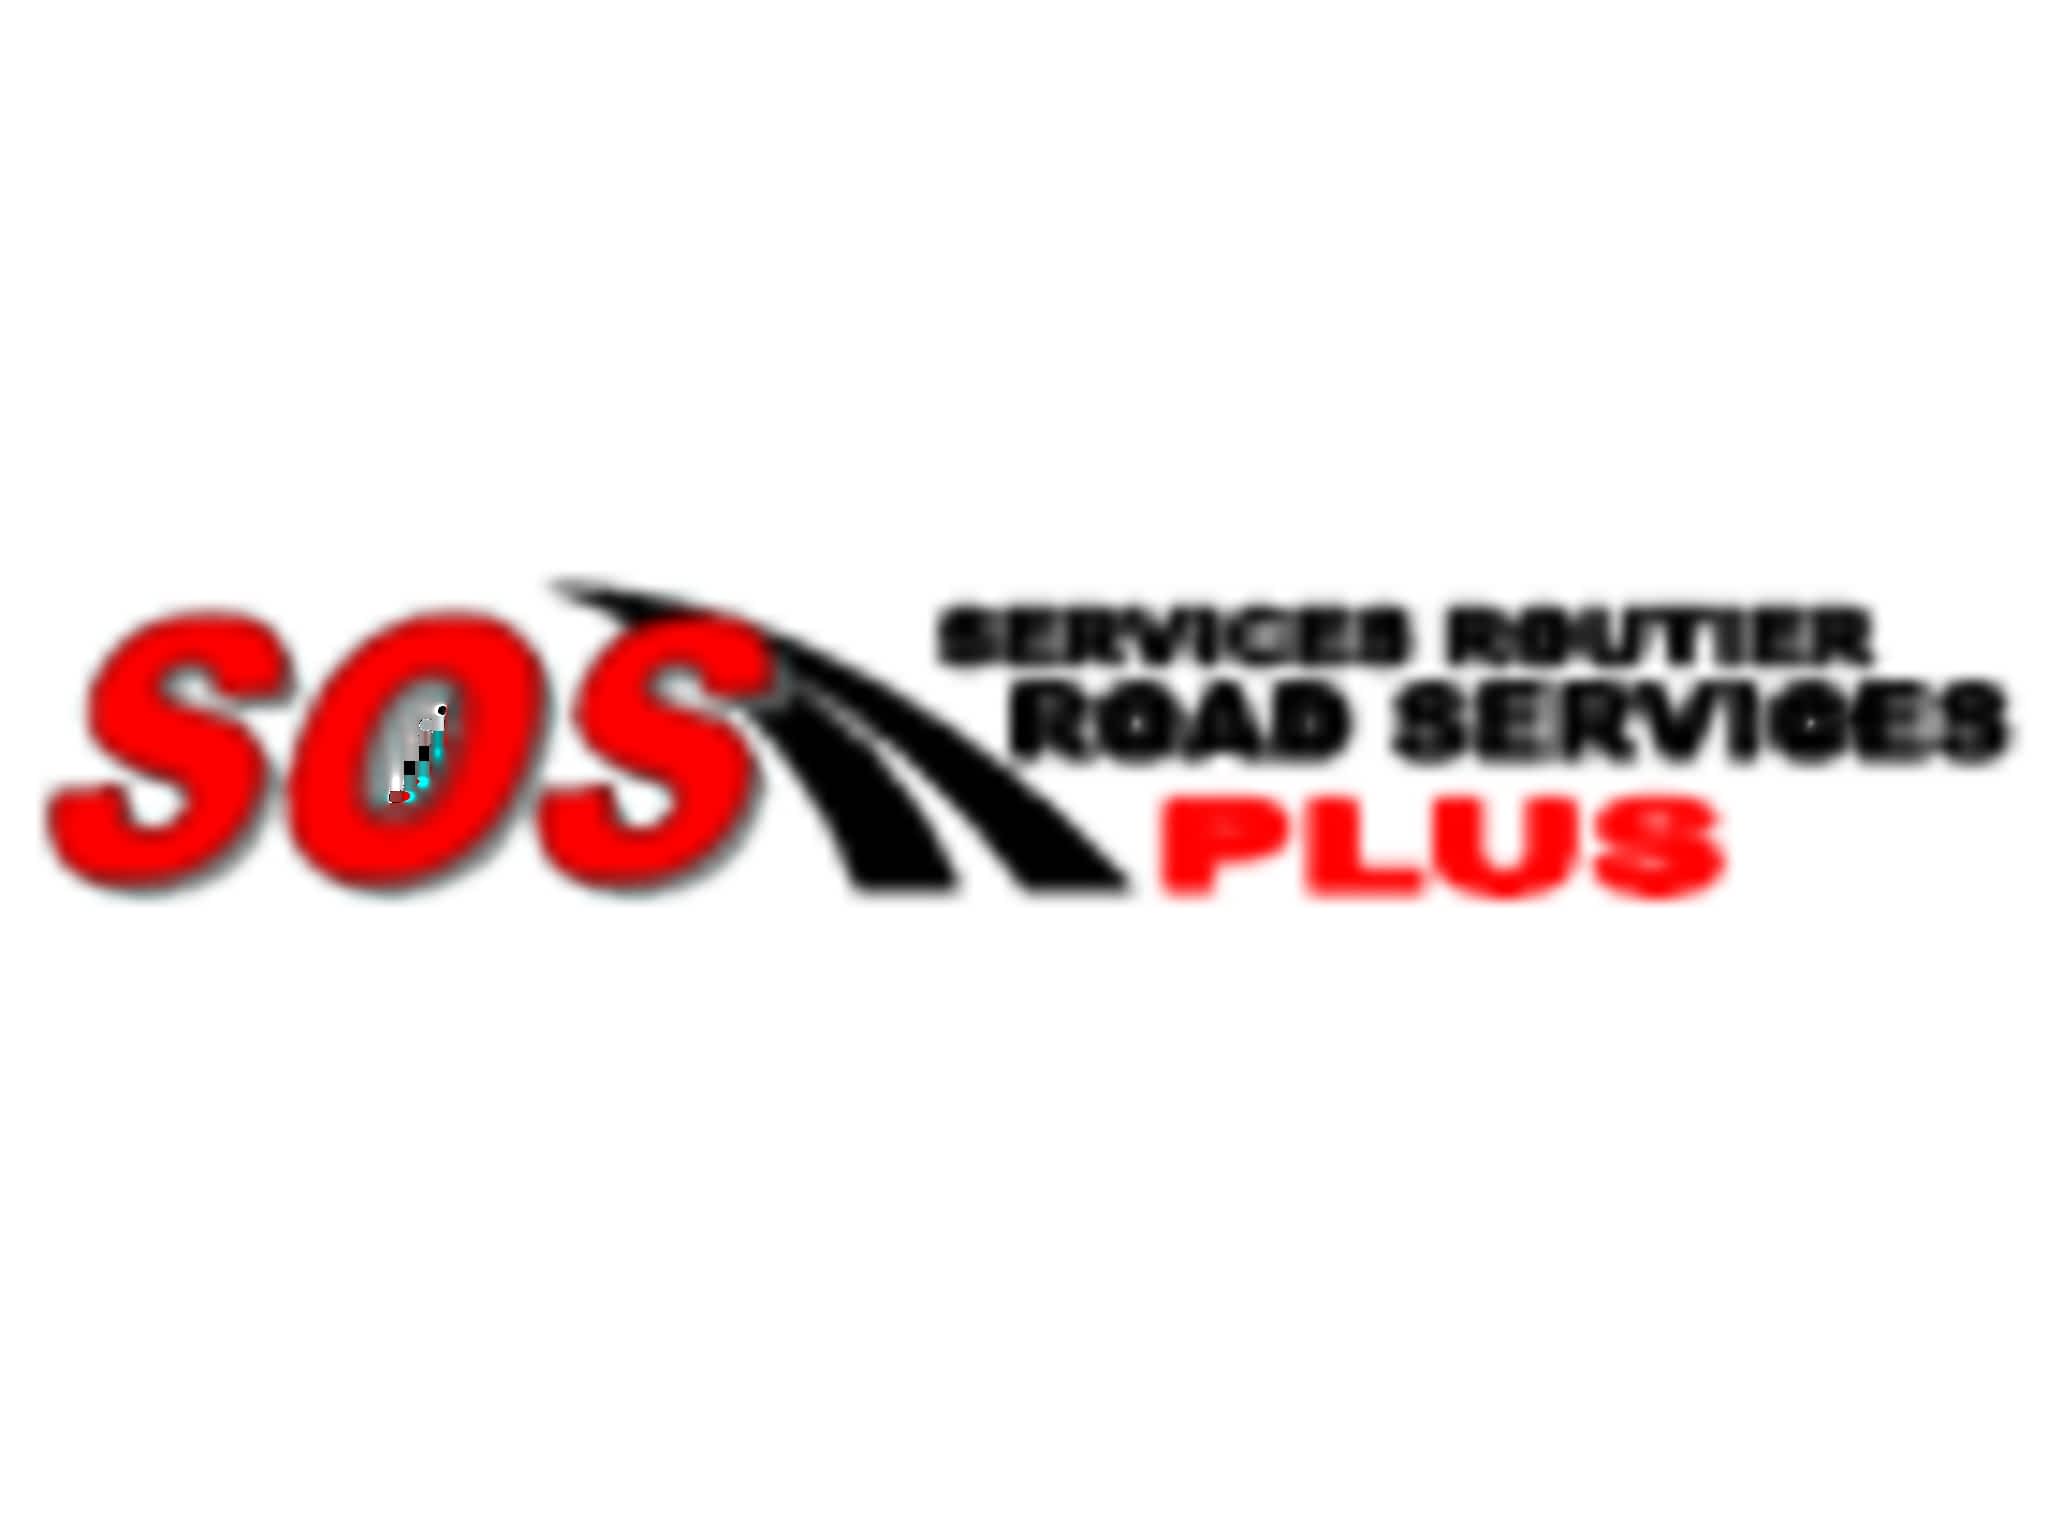 photo SOS Road Services Plus